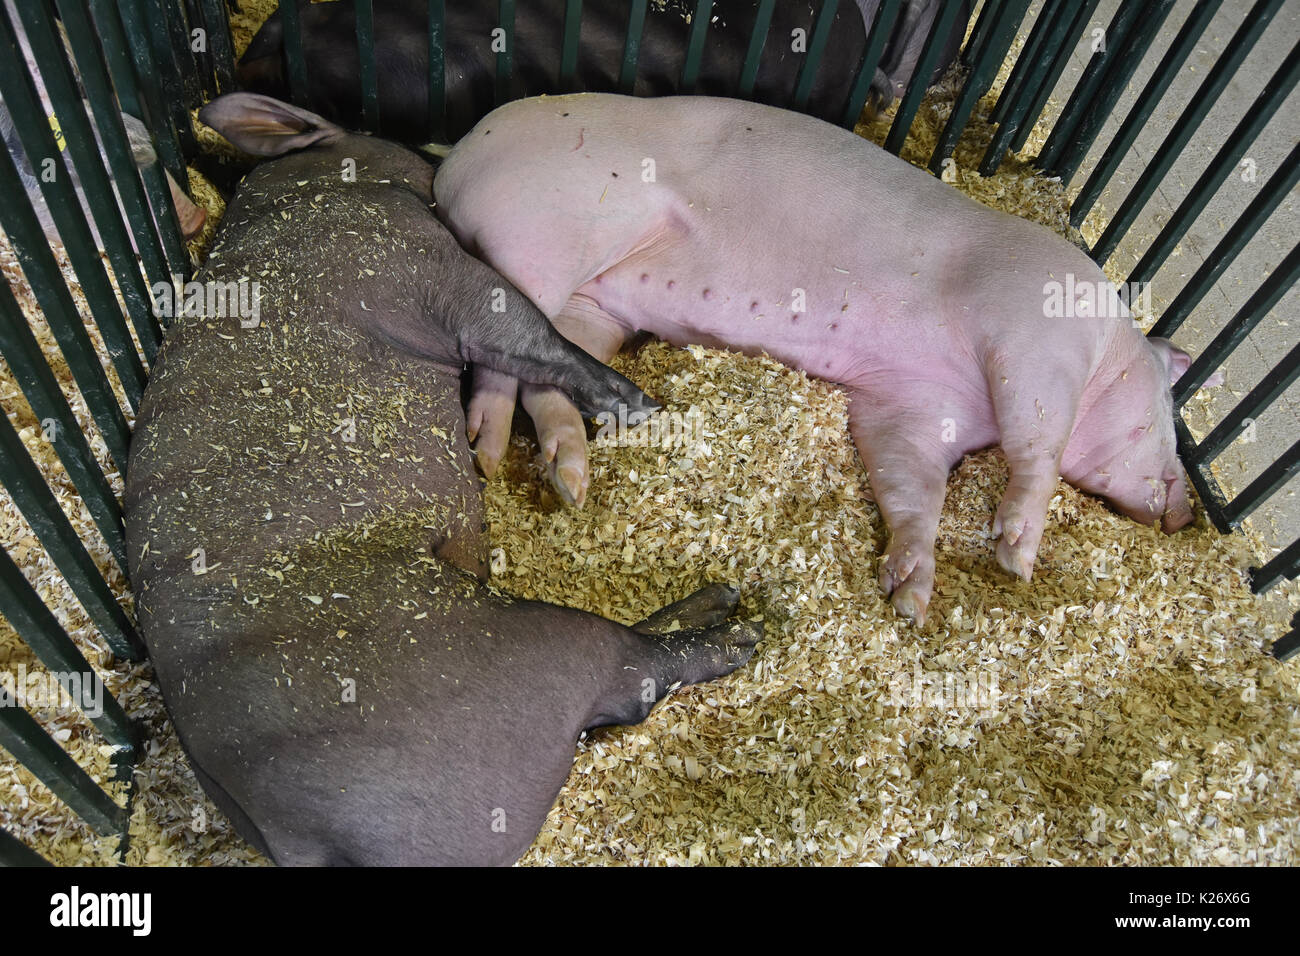 Pigs snuggle in pen at fair Stock Photo